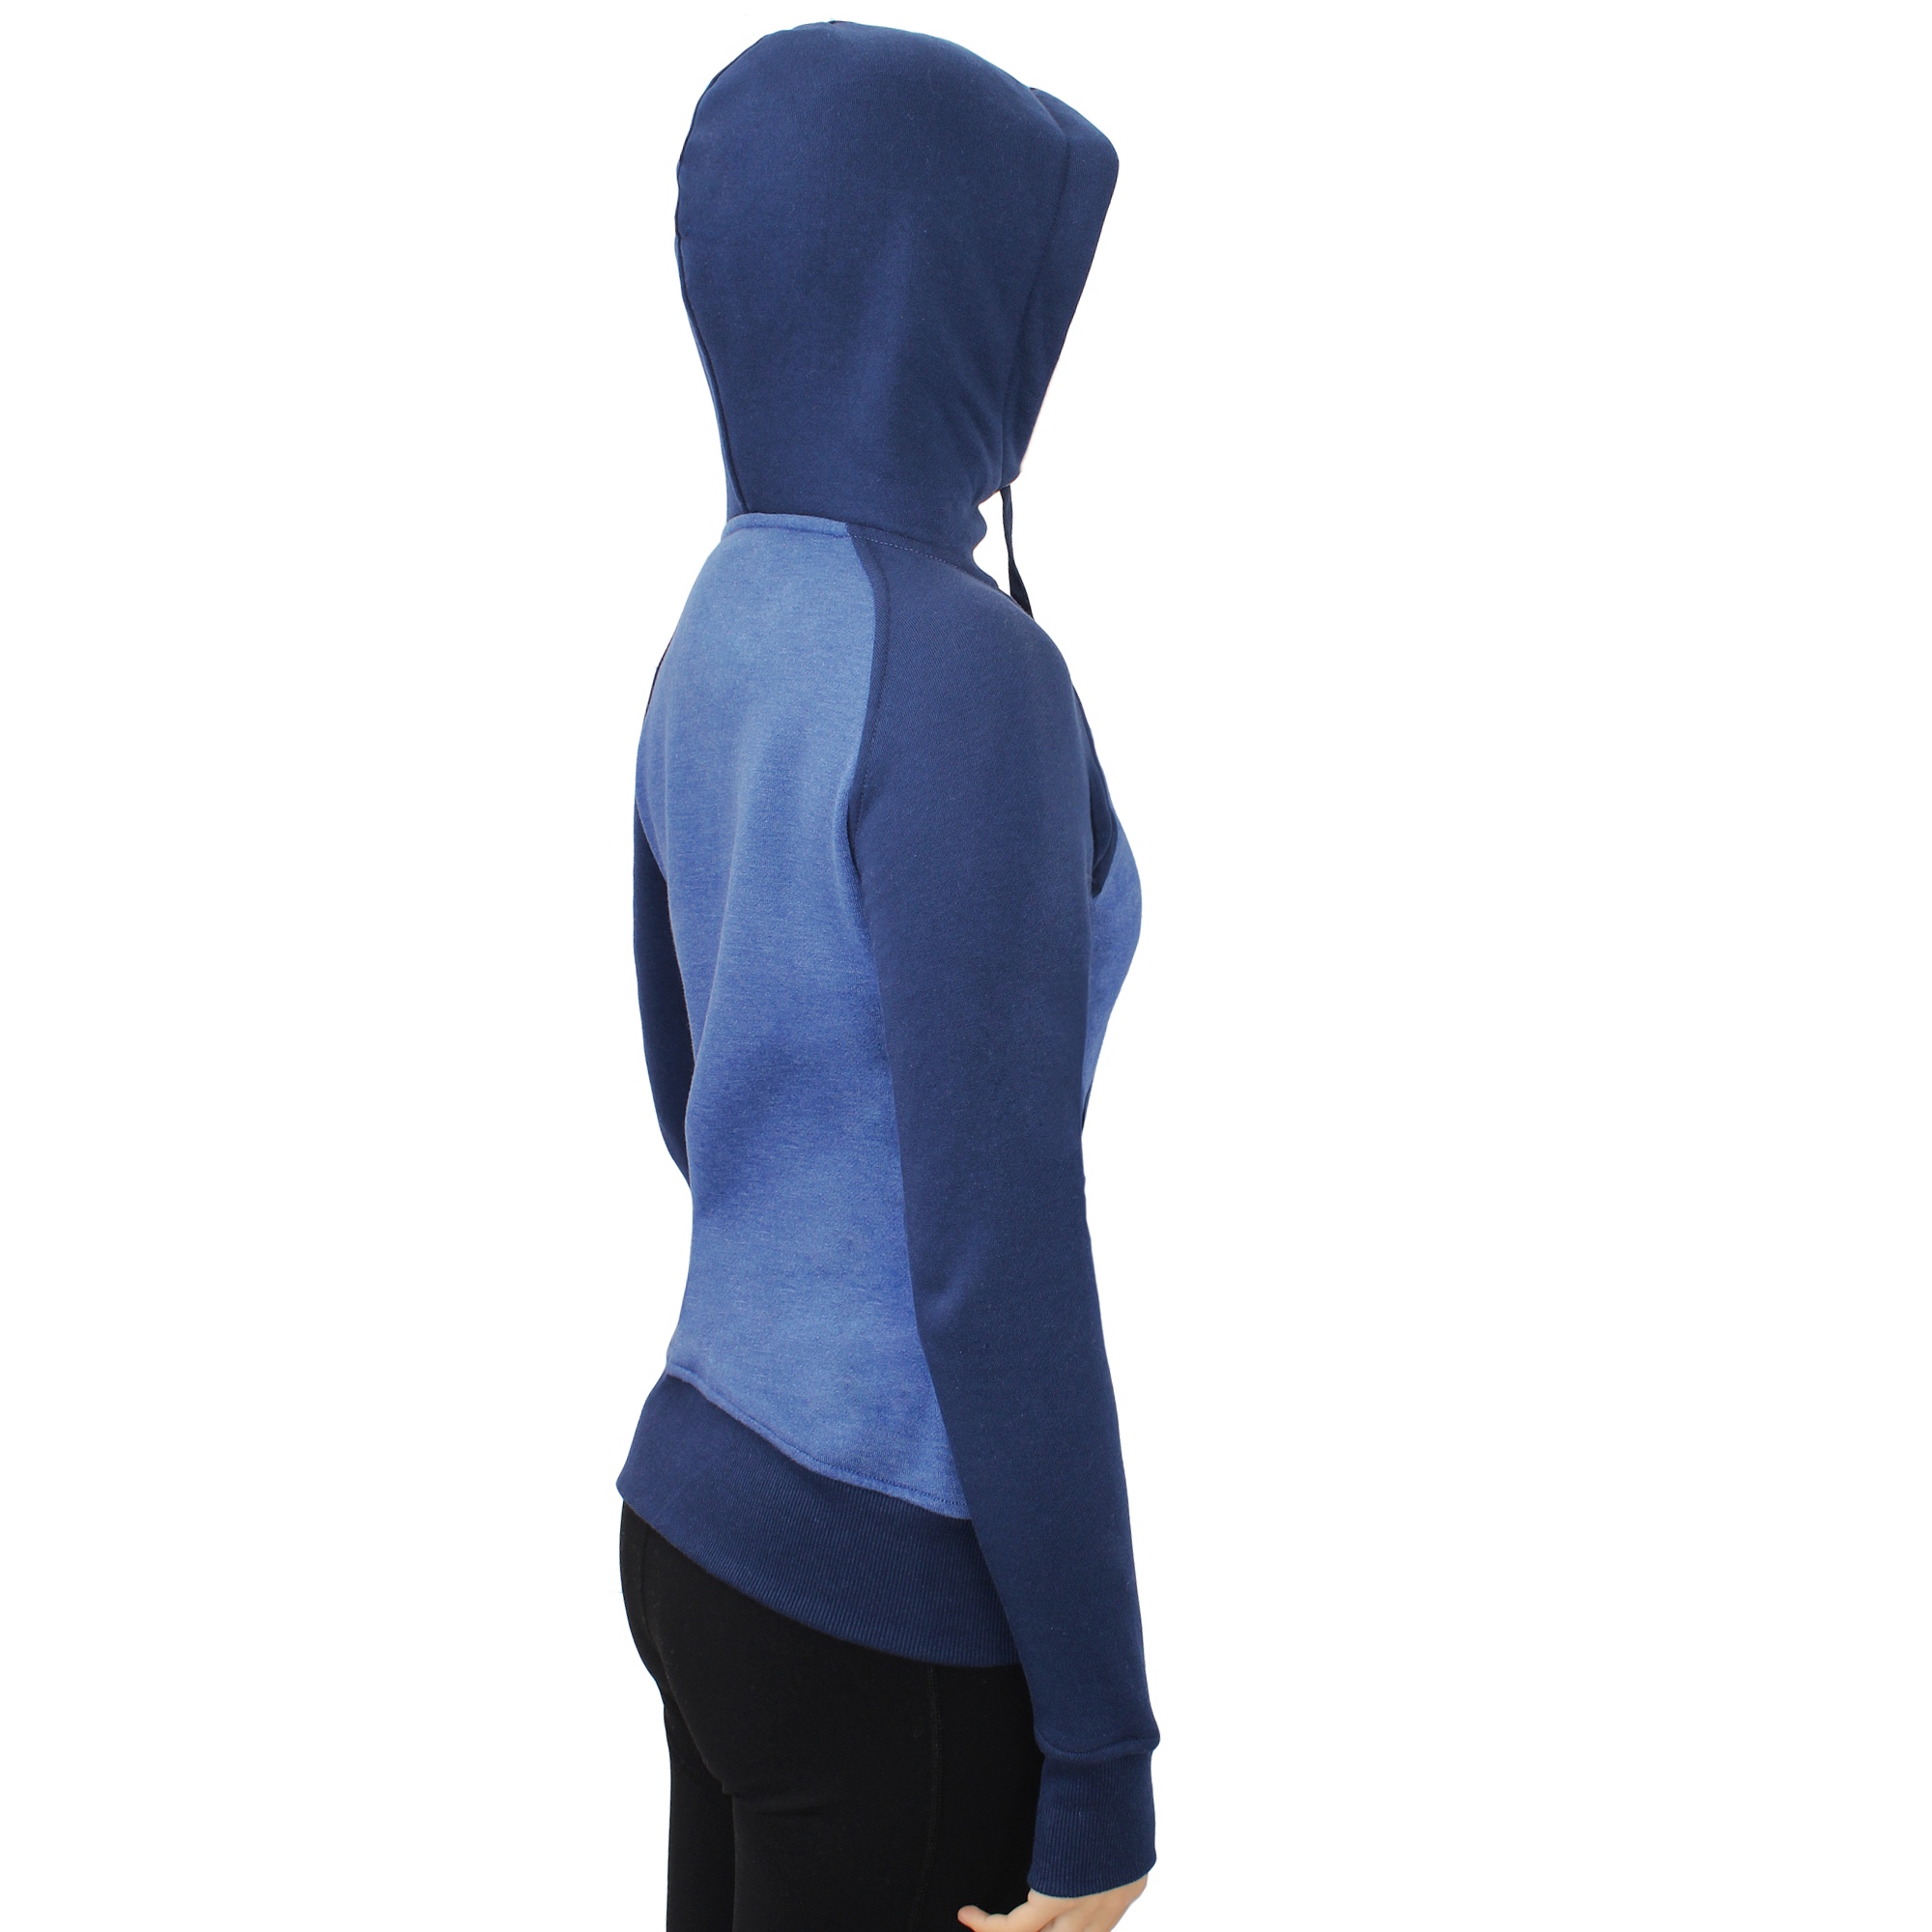 Women's Athletic Running Hoodies Double Zipper Heads Sweatshirt Jackets